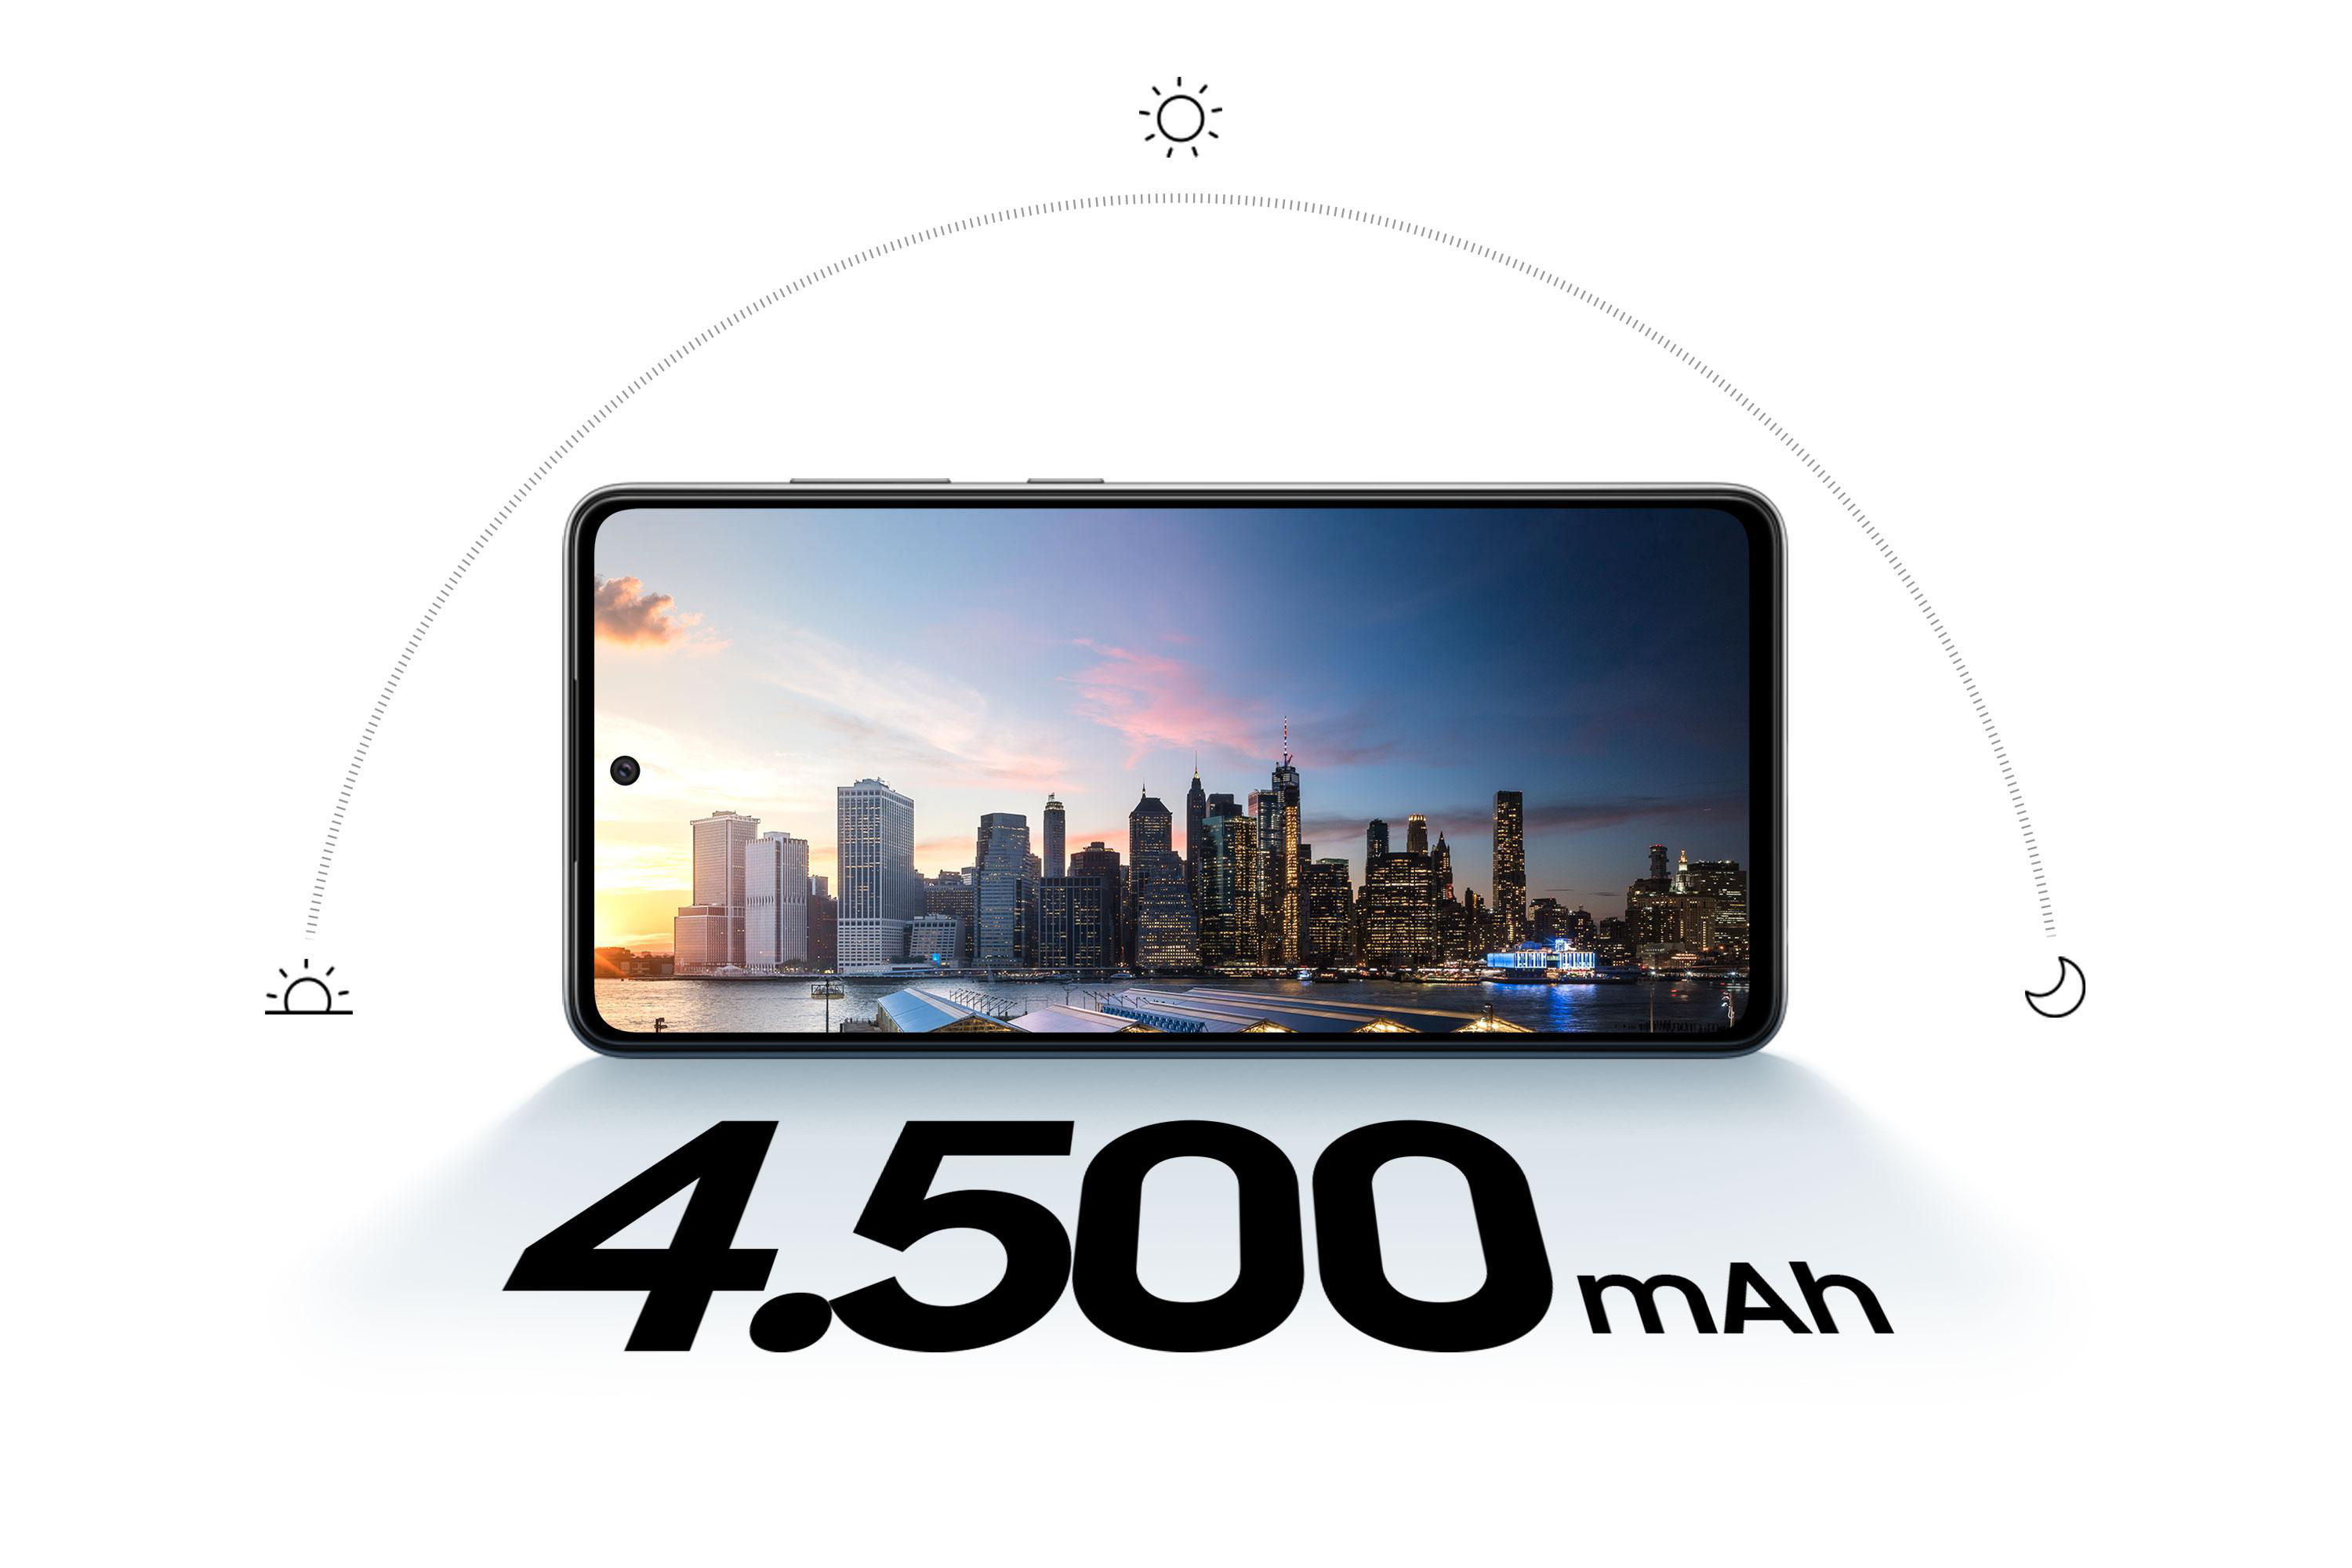 SAMSUNG Galaxy A52 5G GB Dual SIM Awesome 128 White